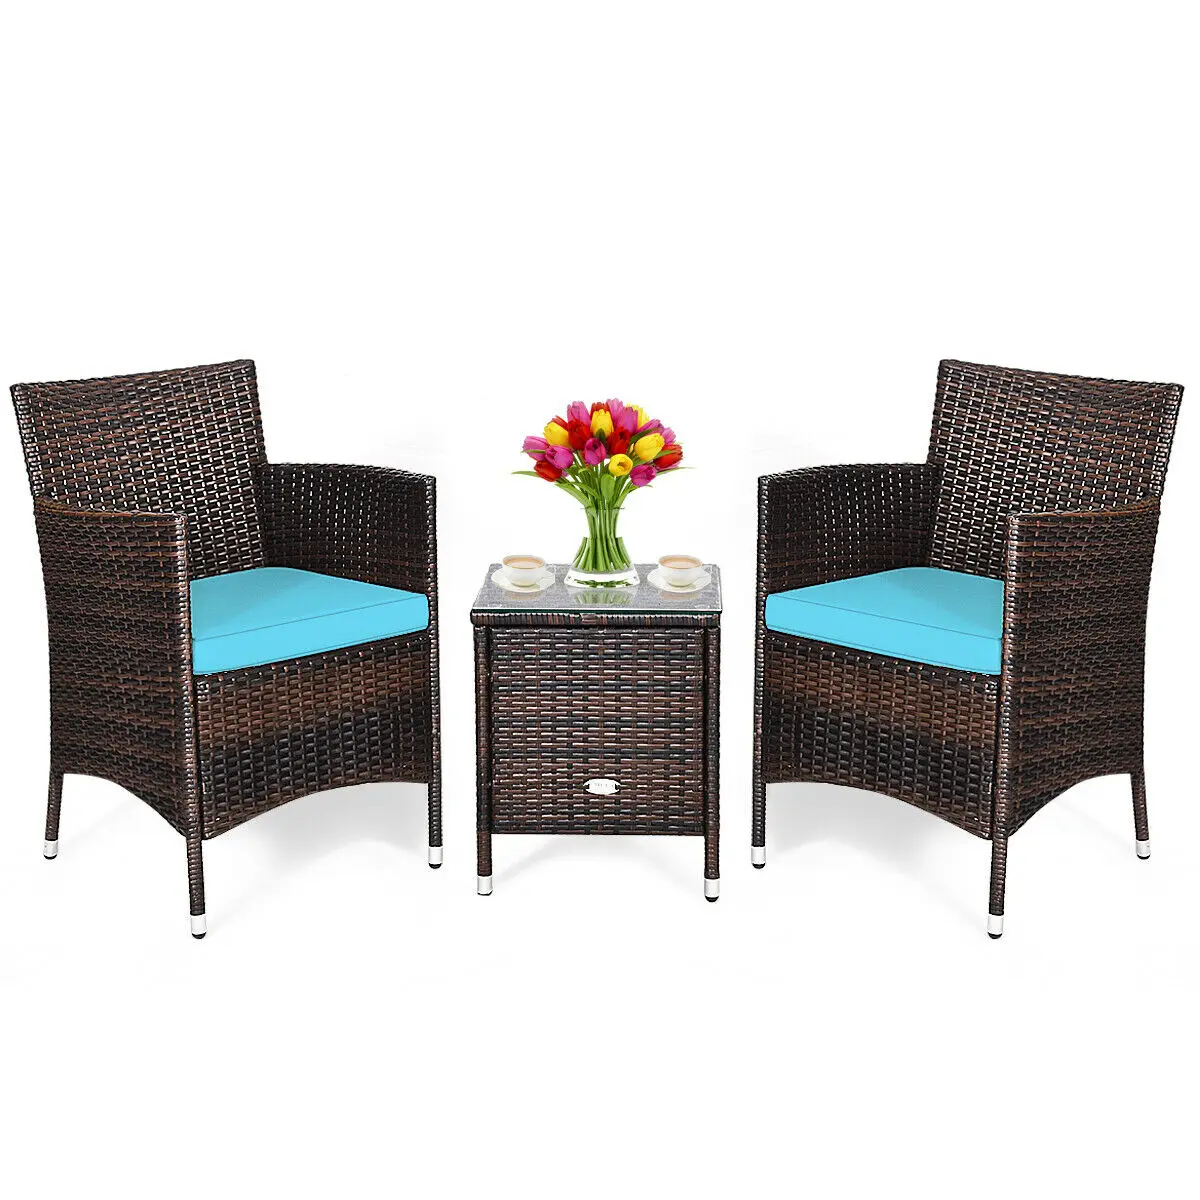 Costway Outdoor 3 PCS PE Rattan Wicker Furniture Sets Chairs Coffee Table Garden HW63850